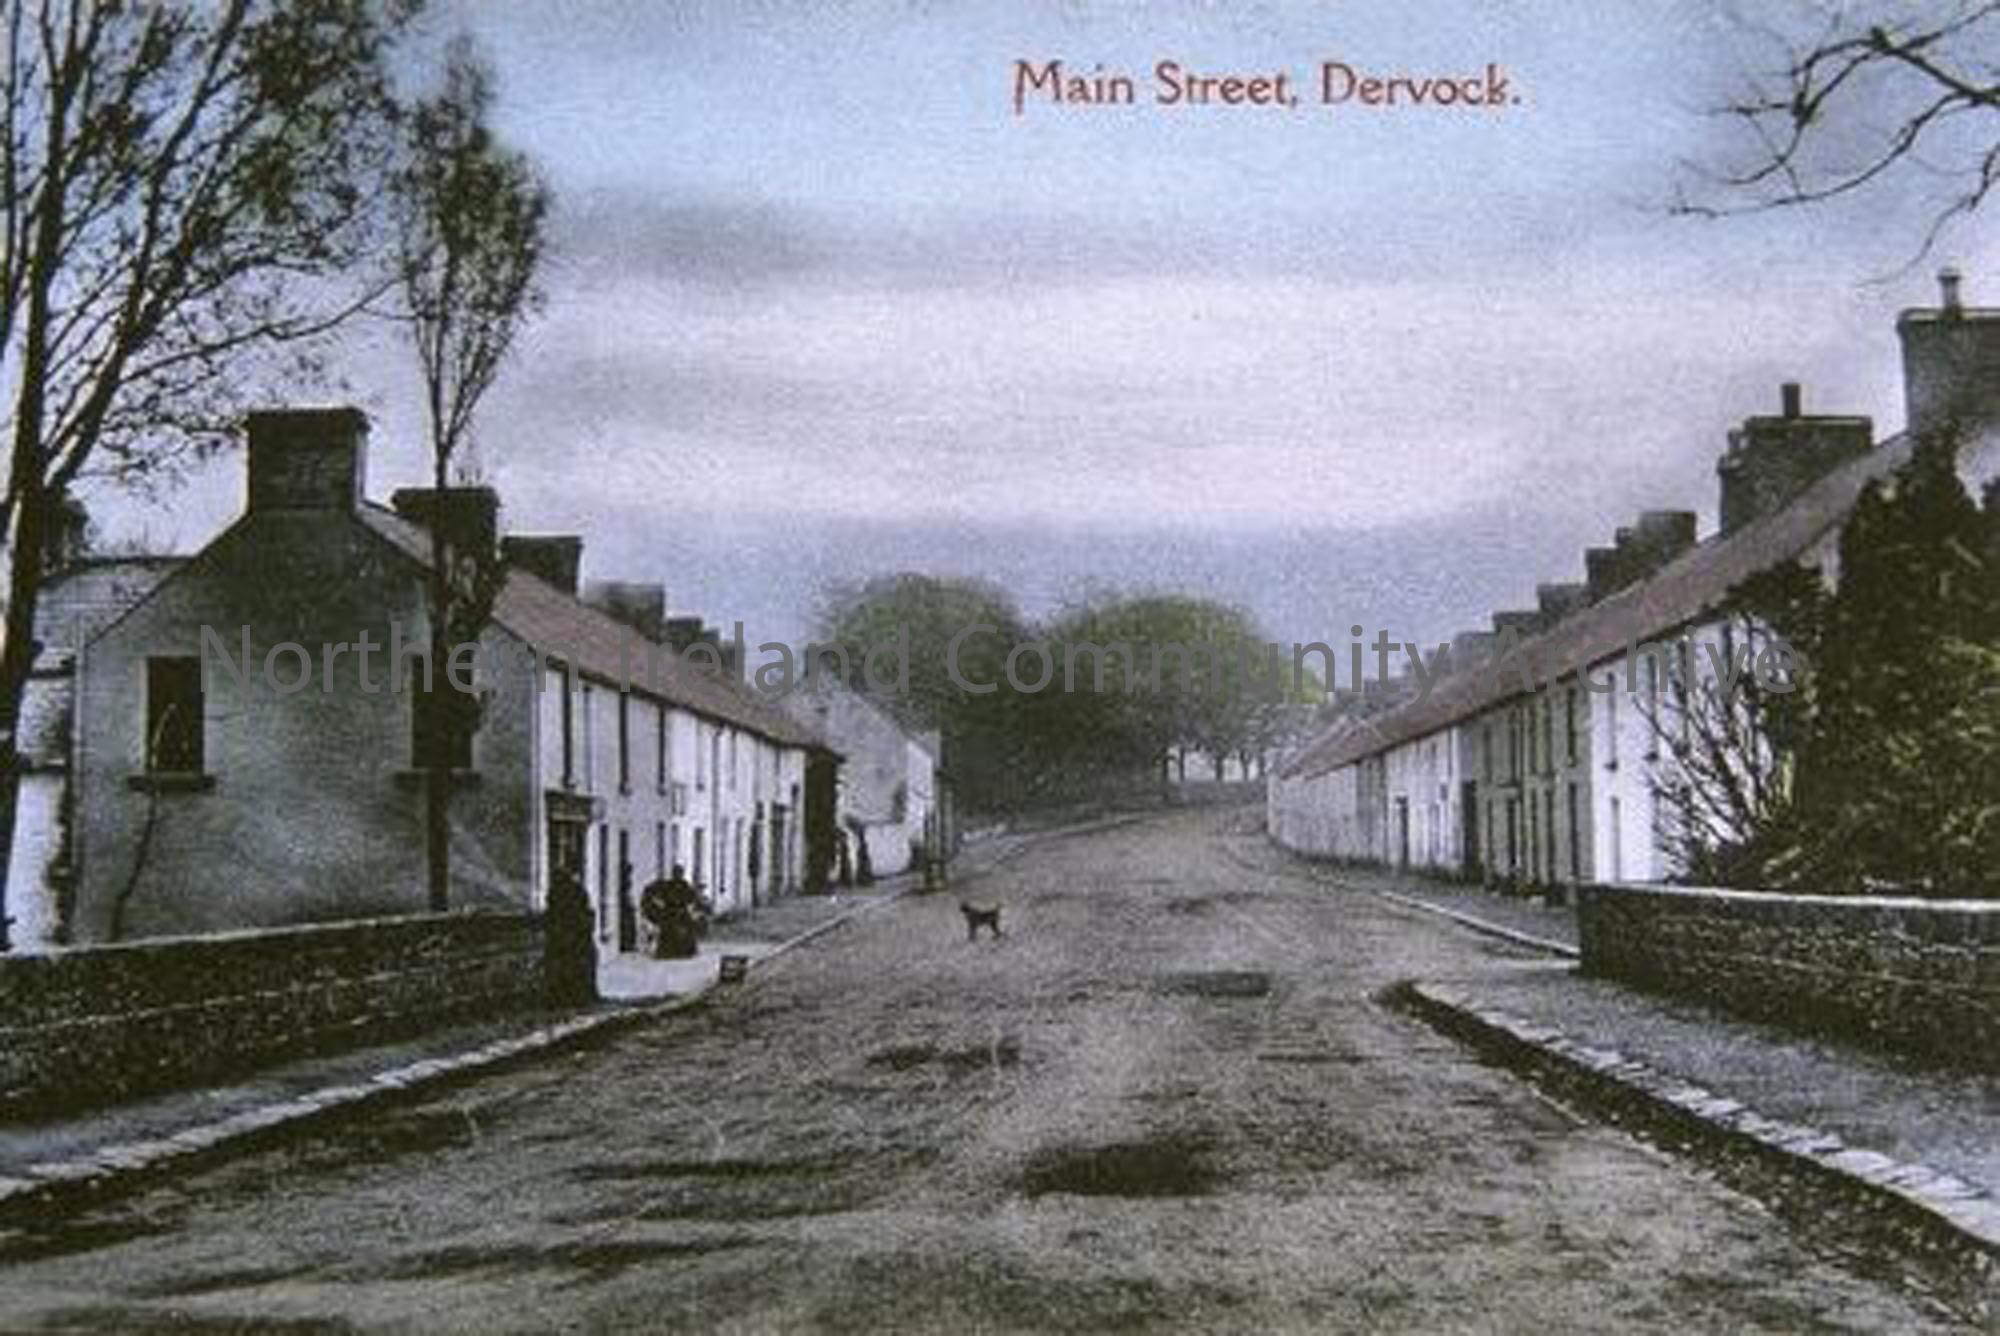 Dervock Main Street (6366)